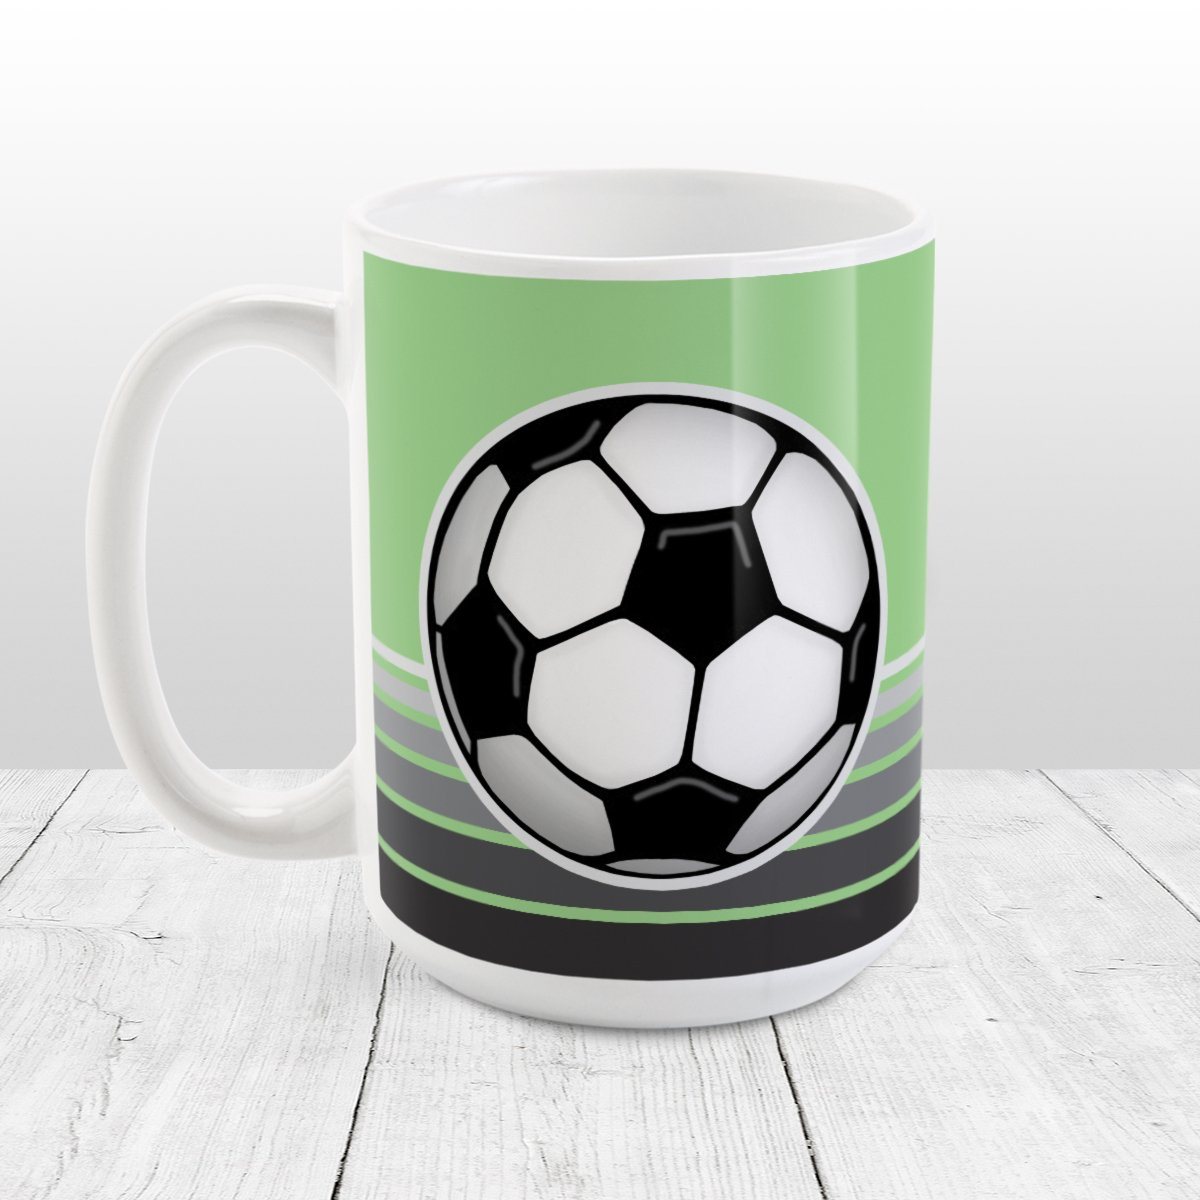 Gray Gradient Lined Green Soccer Ball Mug at Amy's Coffee Mugs